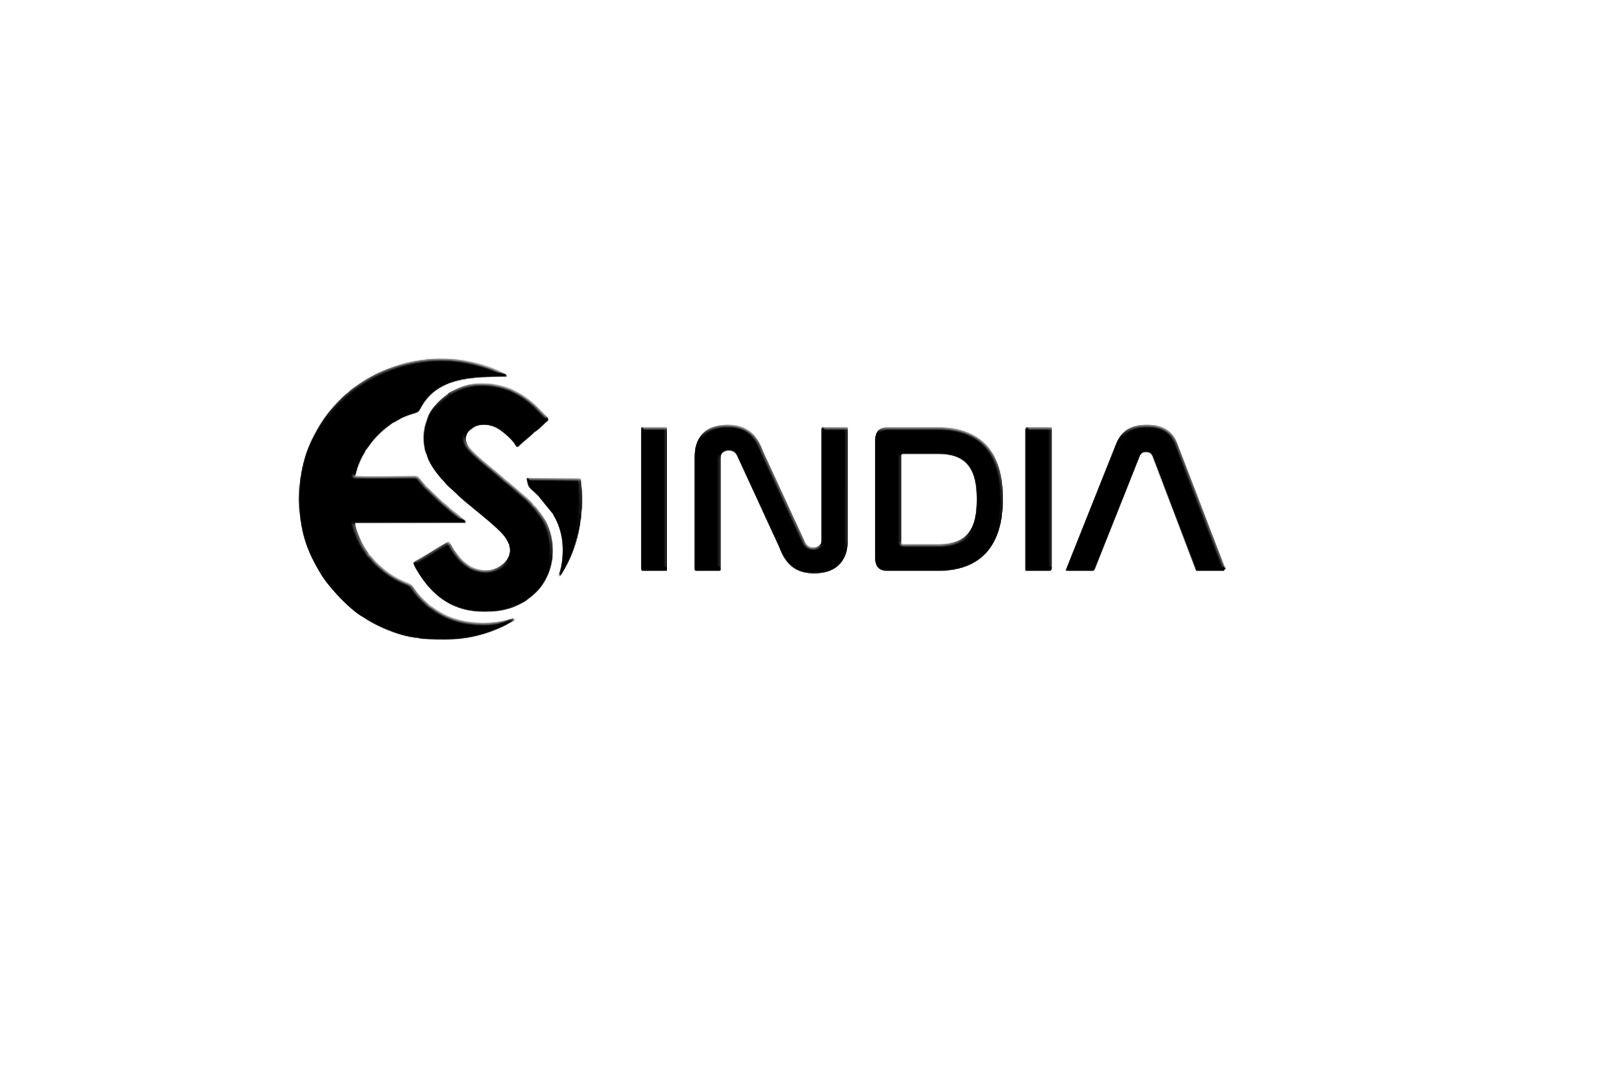 ESG INDIA